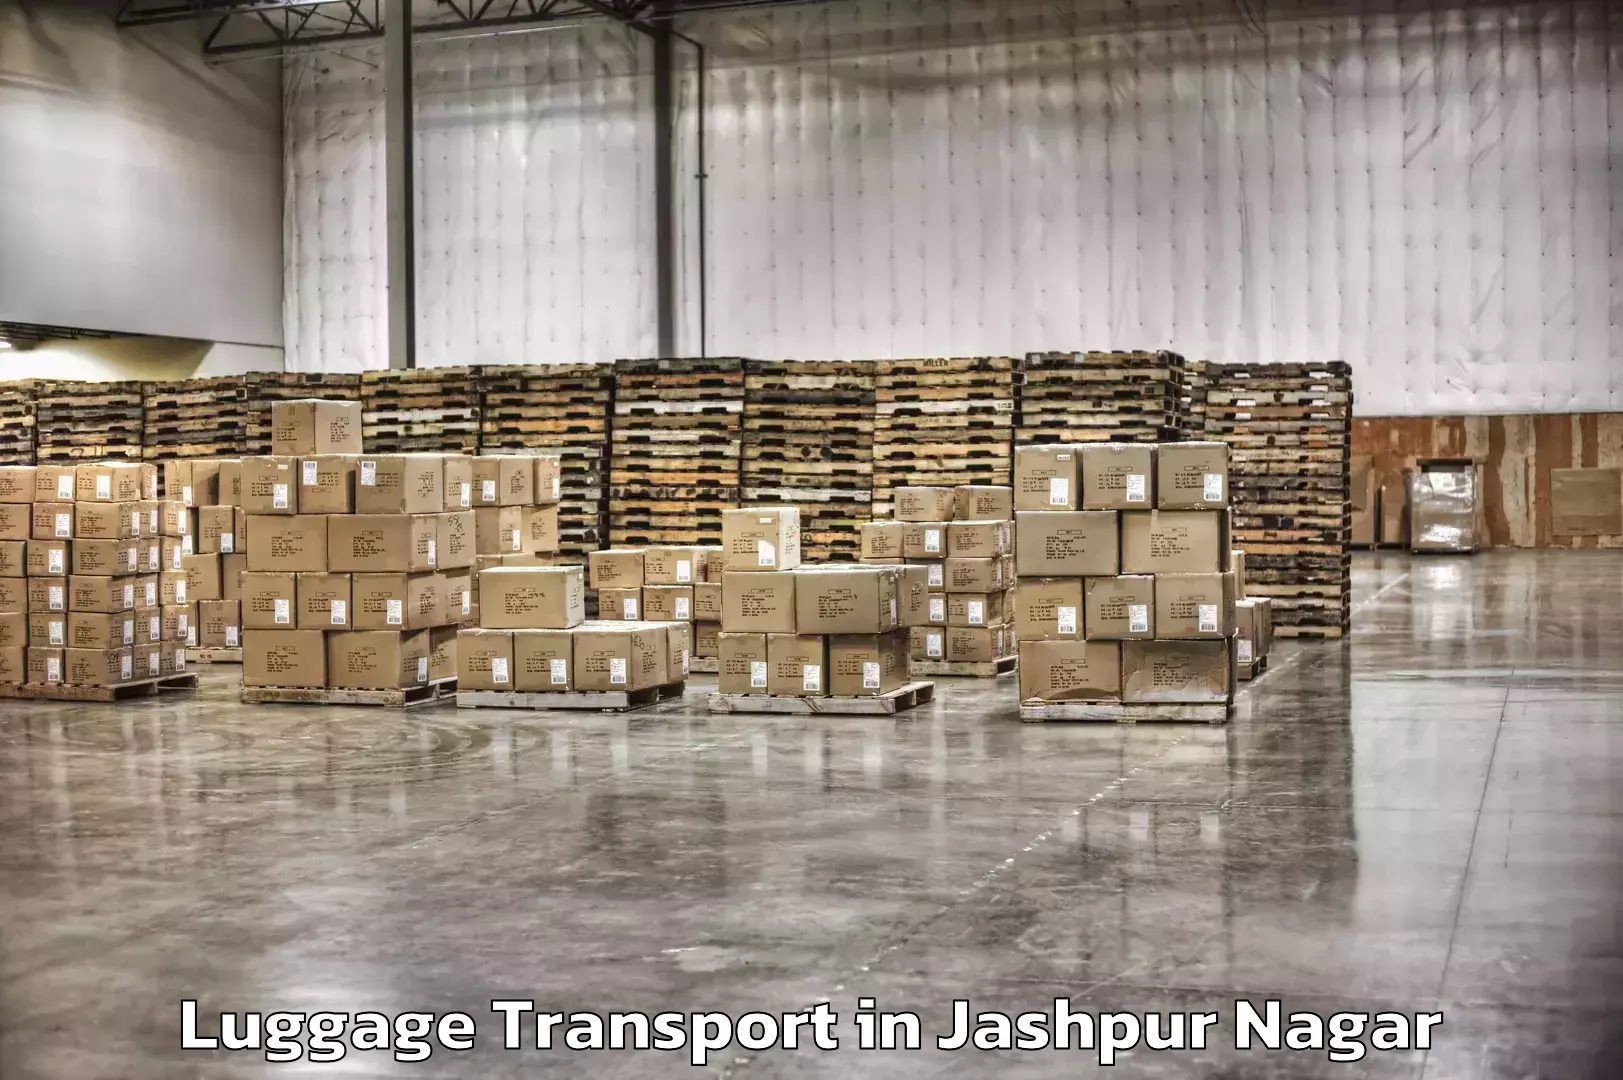 Luggage delivery operations in Jashpur Nagar